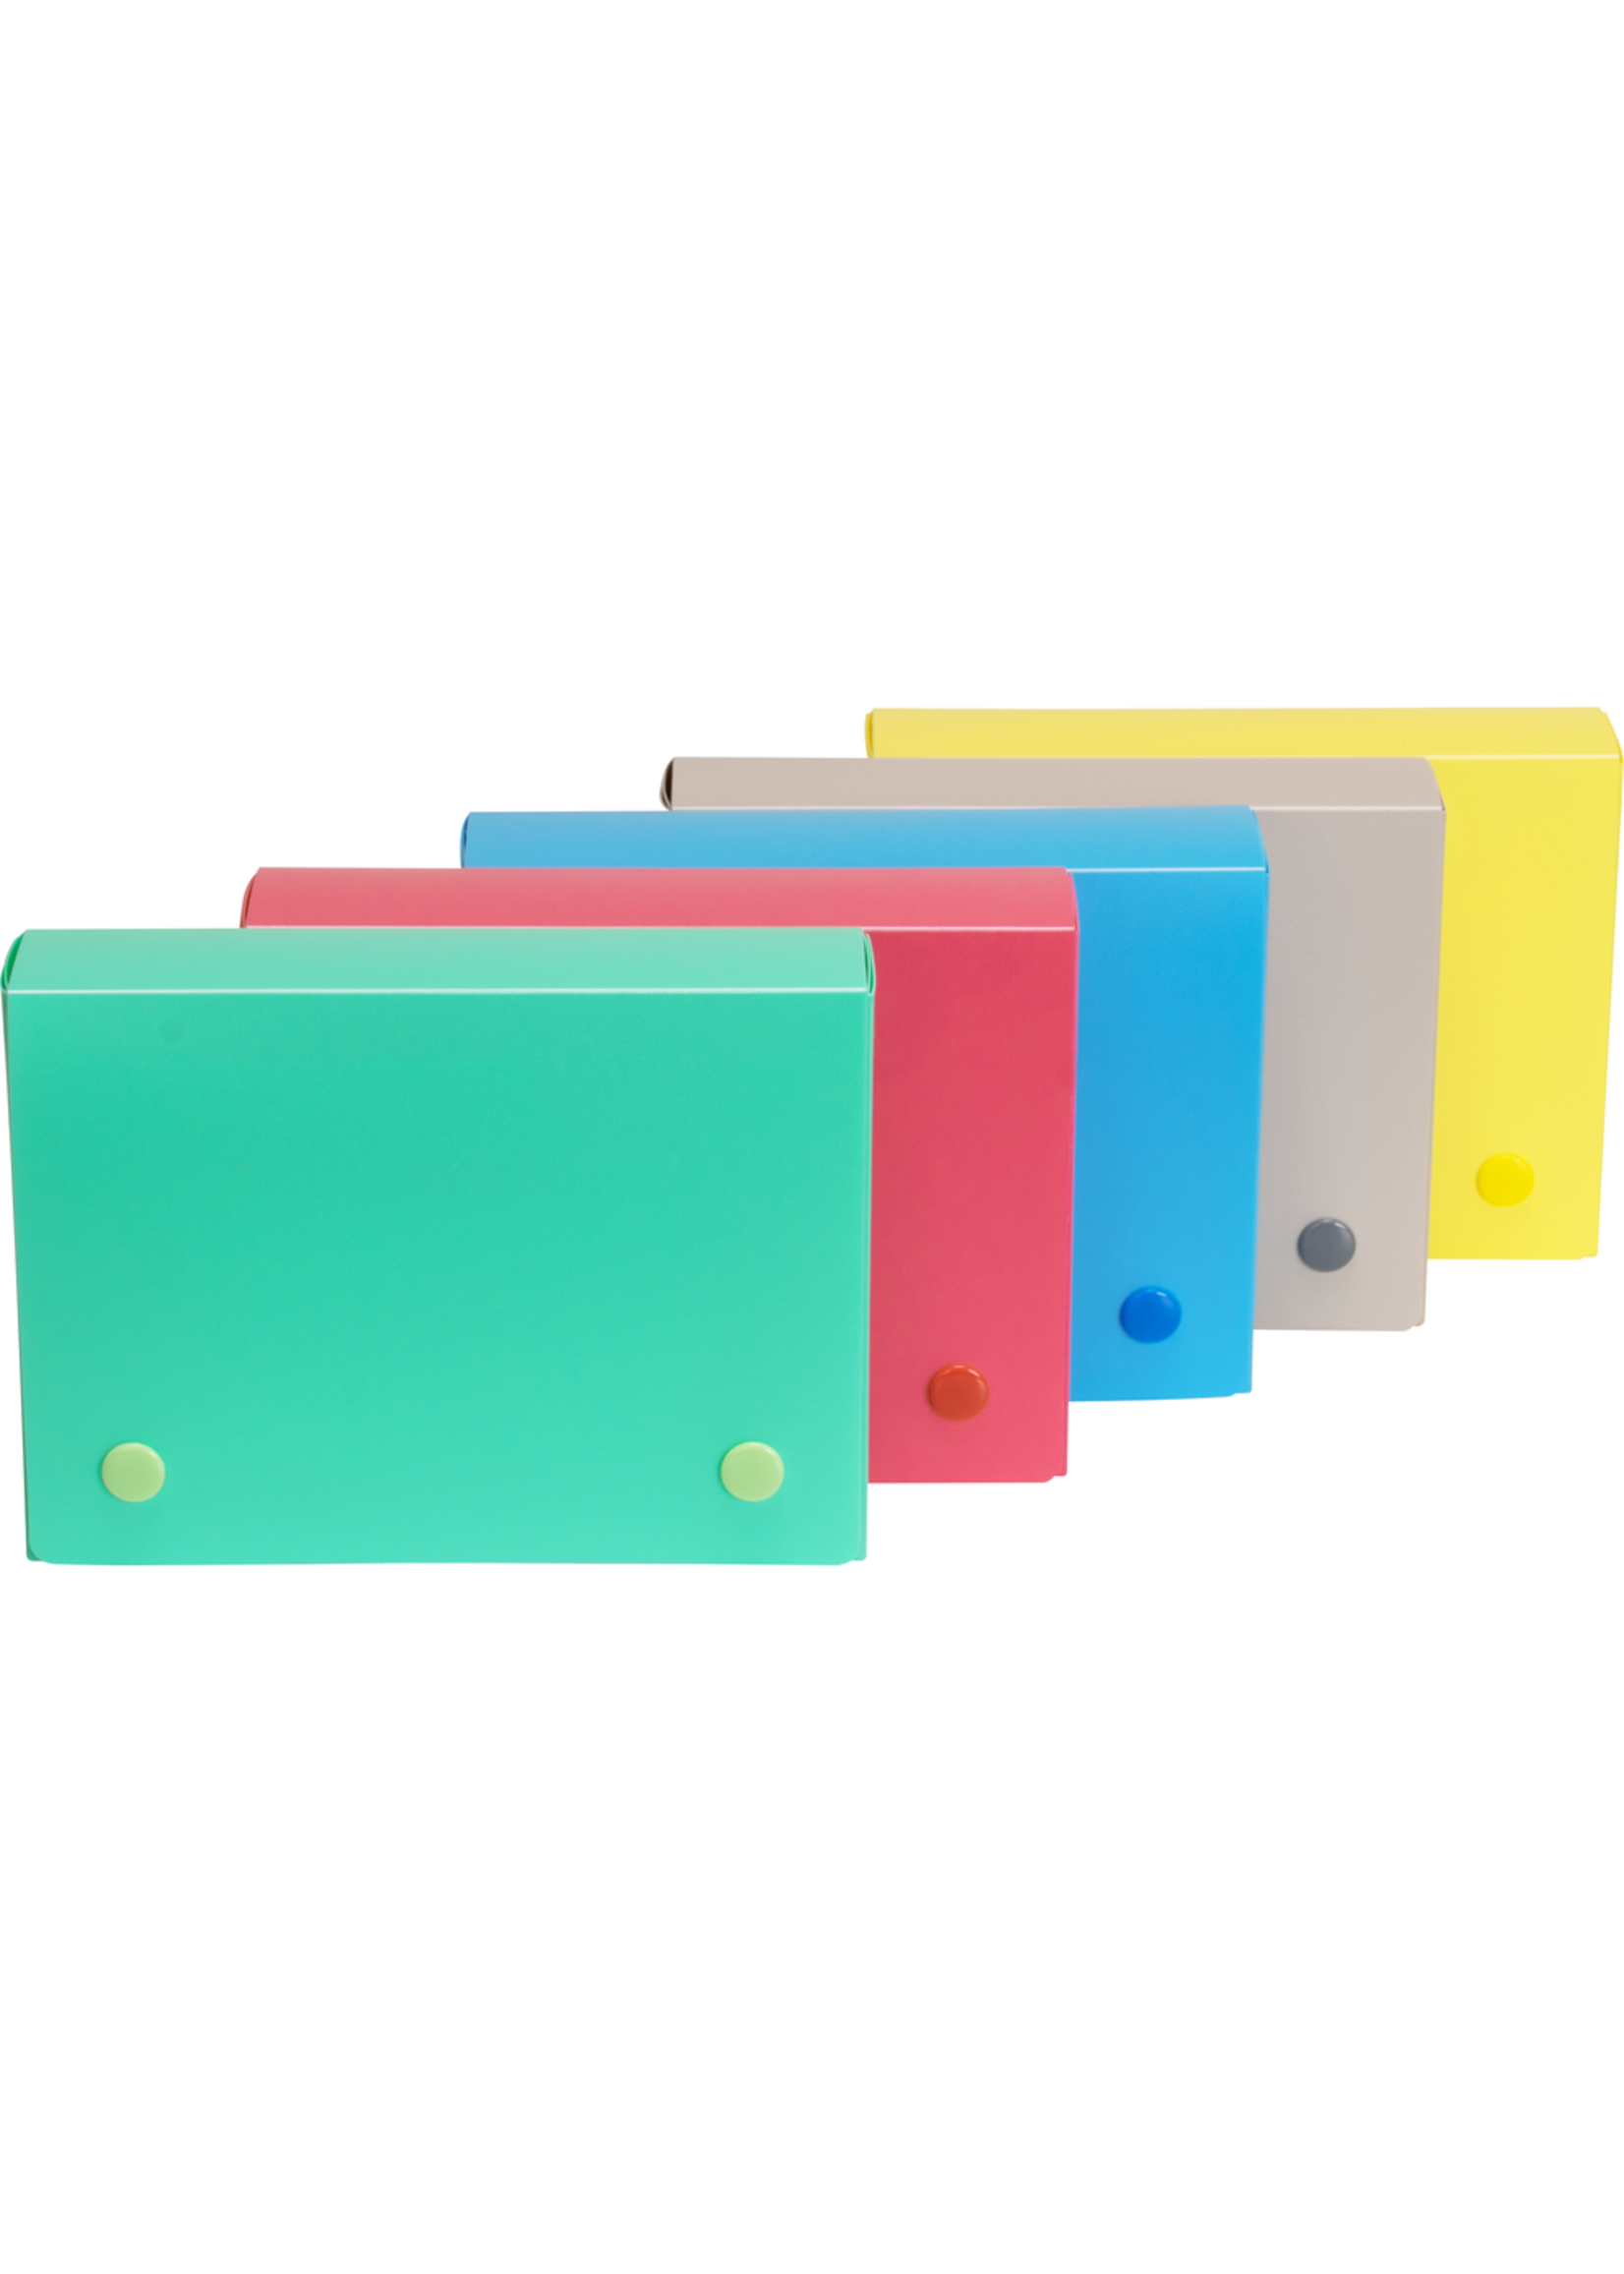 C-Line C-Line Poly Index Card Case 3x5 Asst colors sold separately